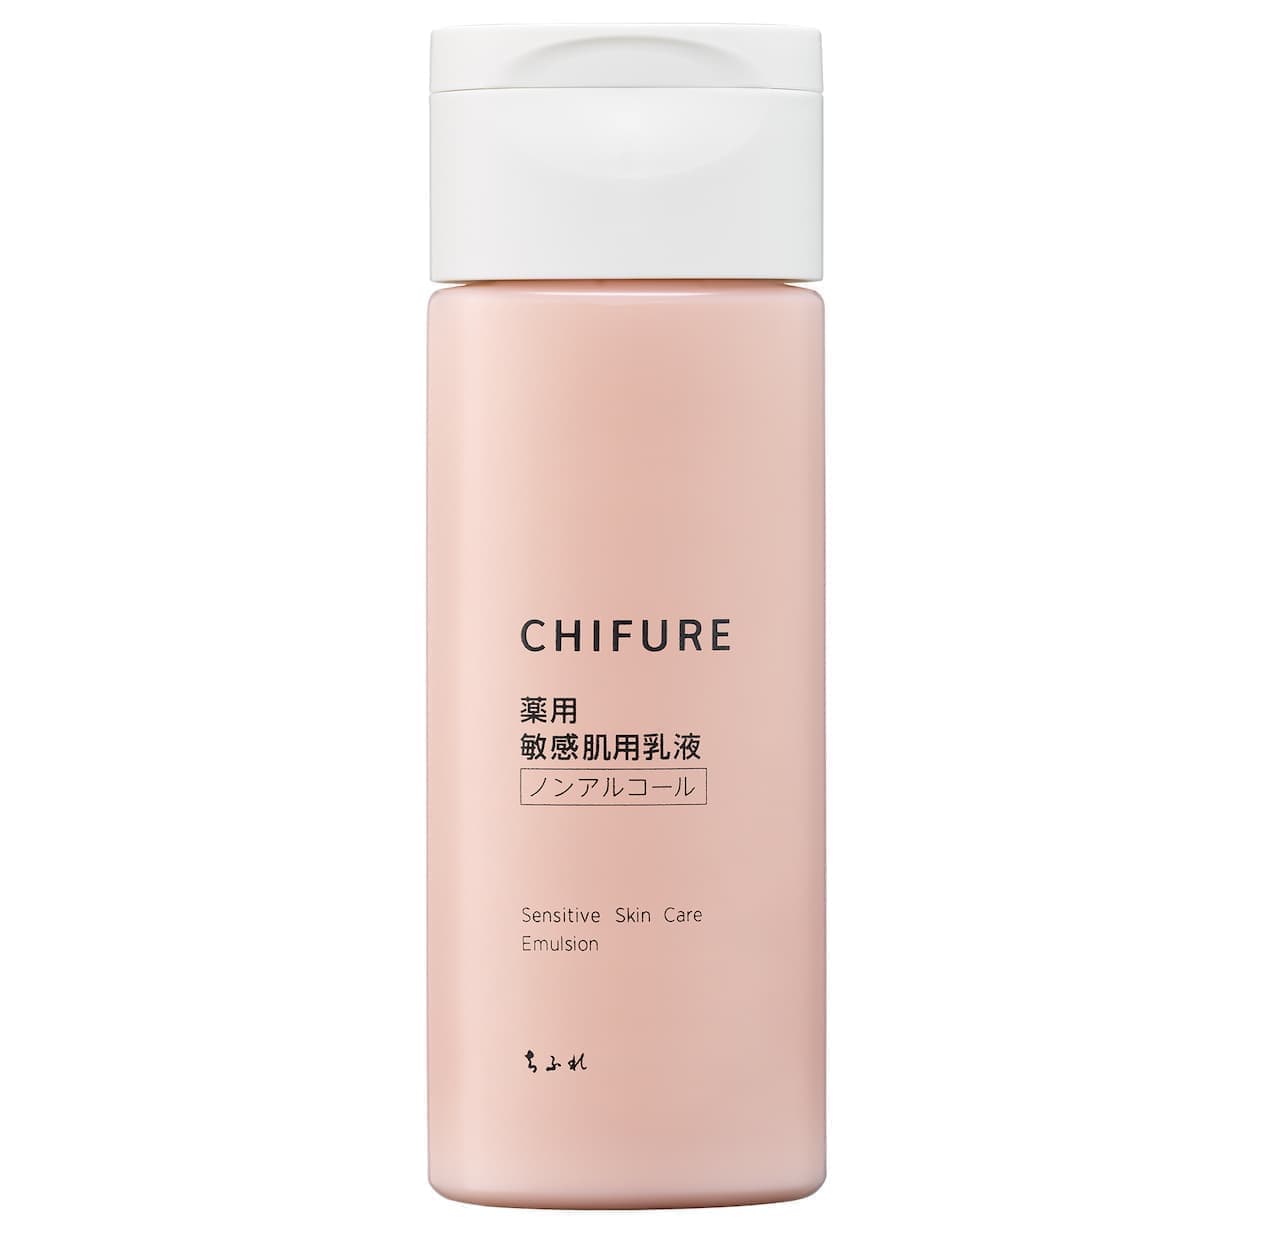 Chifure “Chifure Sensitive Skin Series”